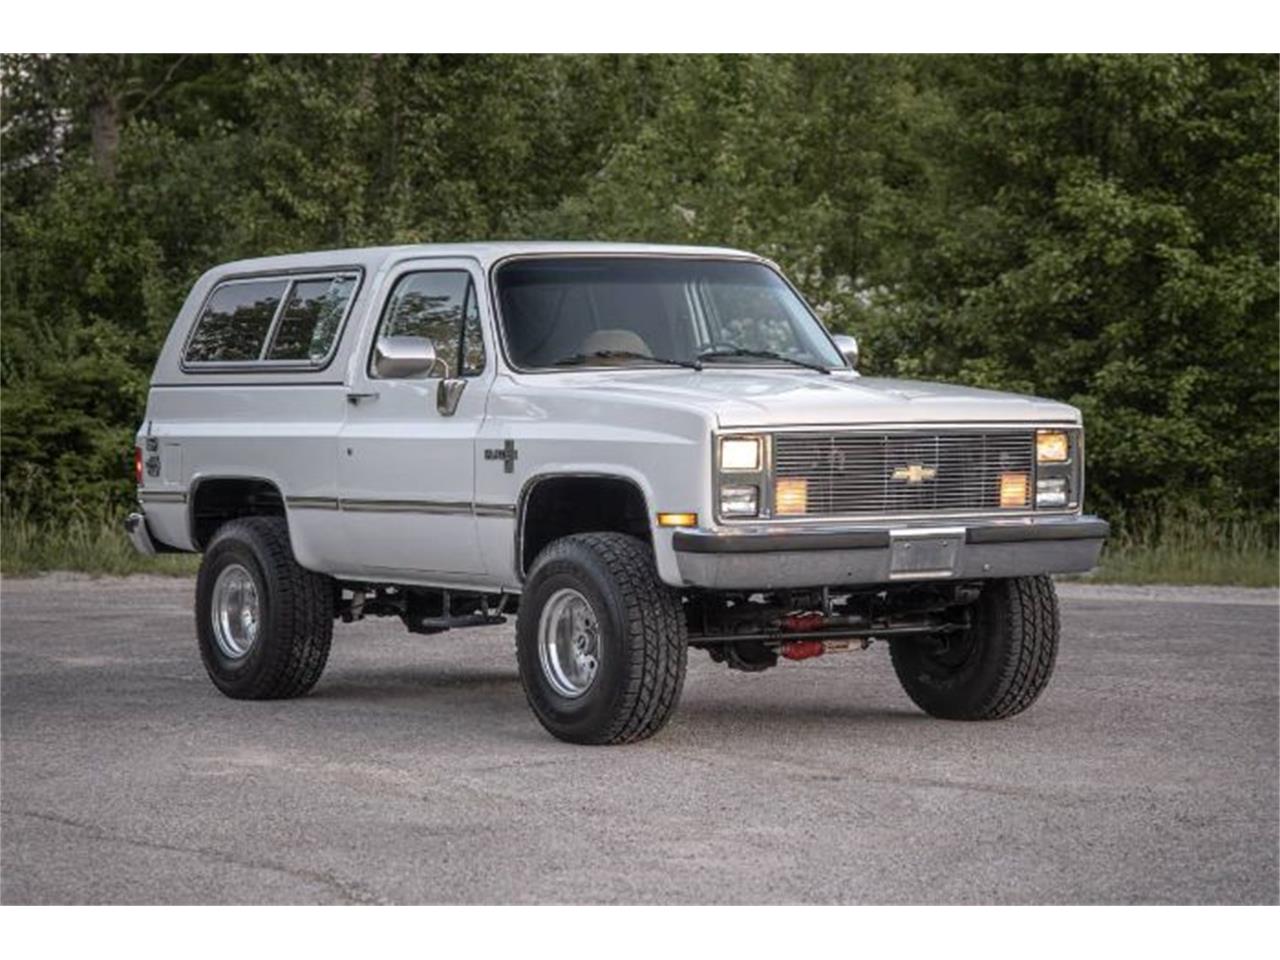 For Sale: 1985 Chevrolet Blazer in Cadillac, Michigan for sale in Cadillac, MI